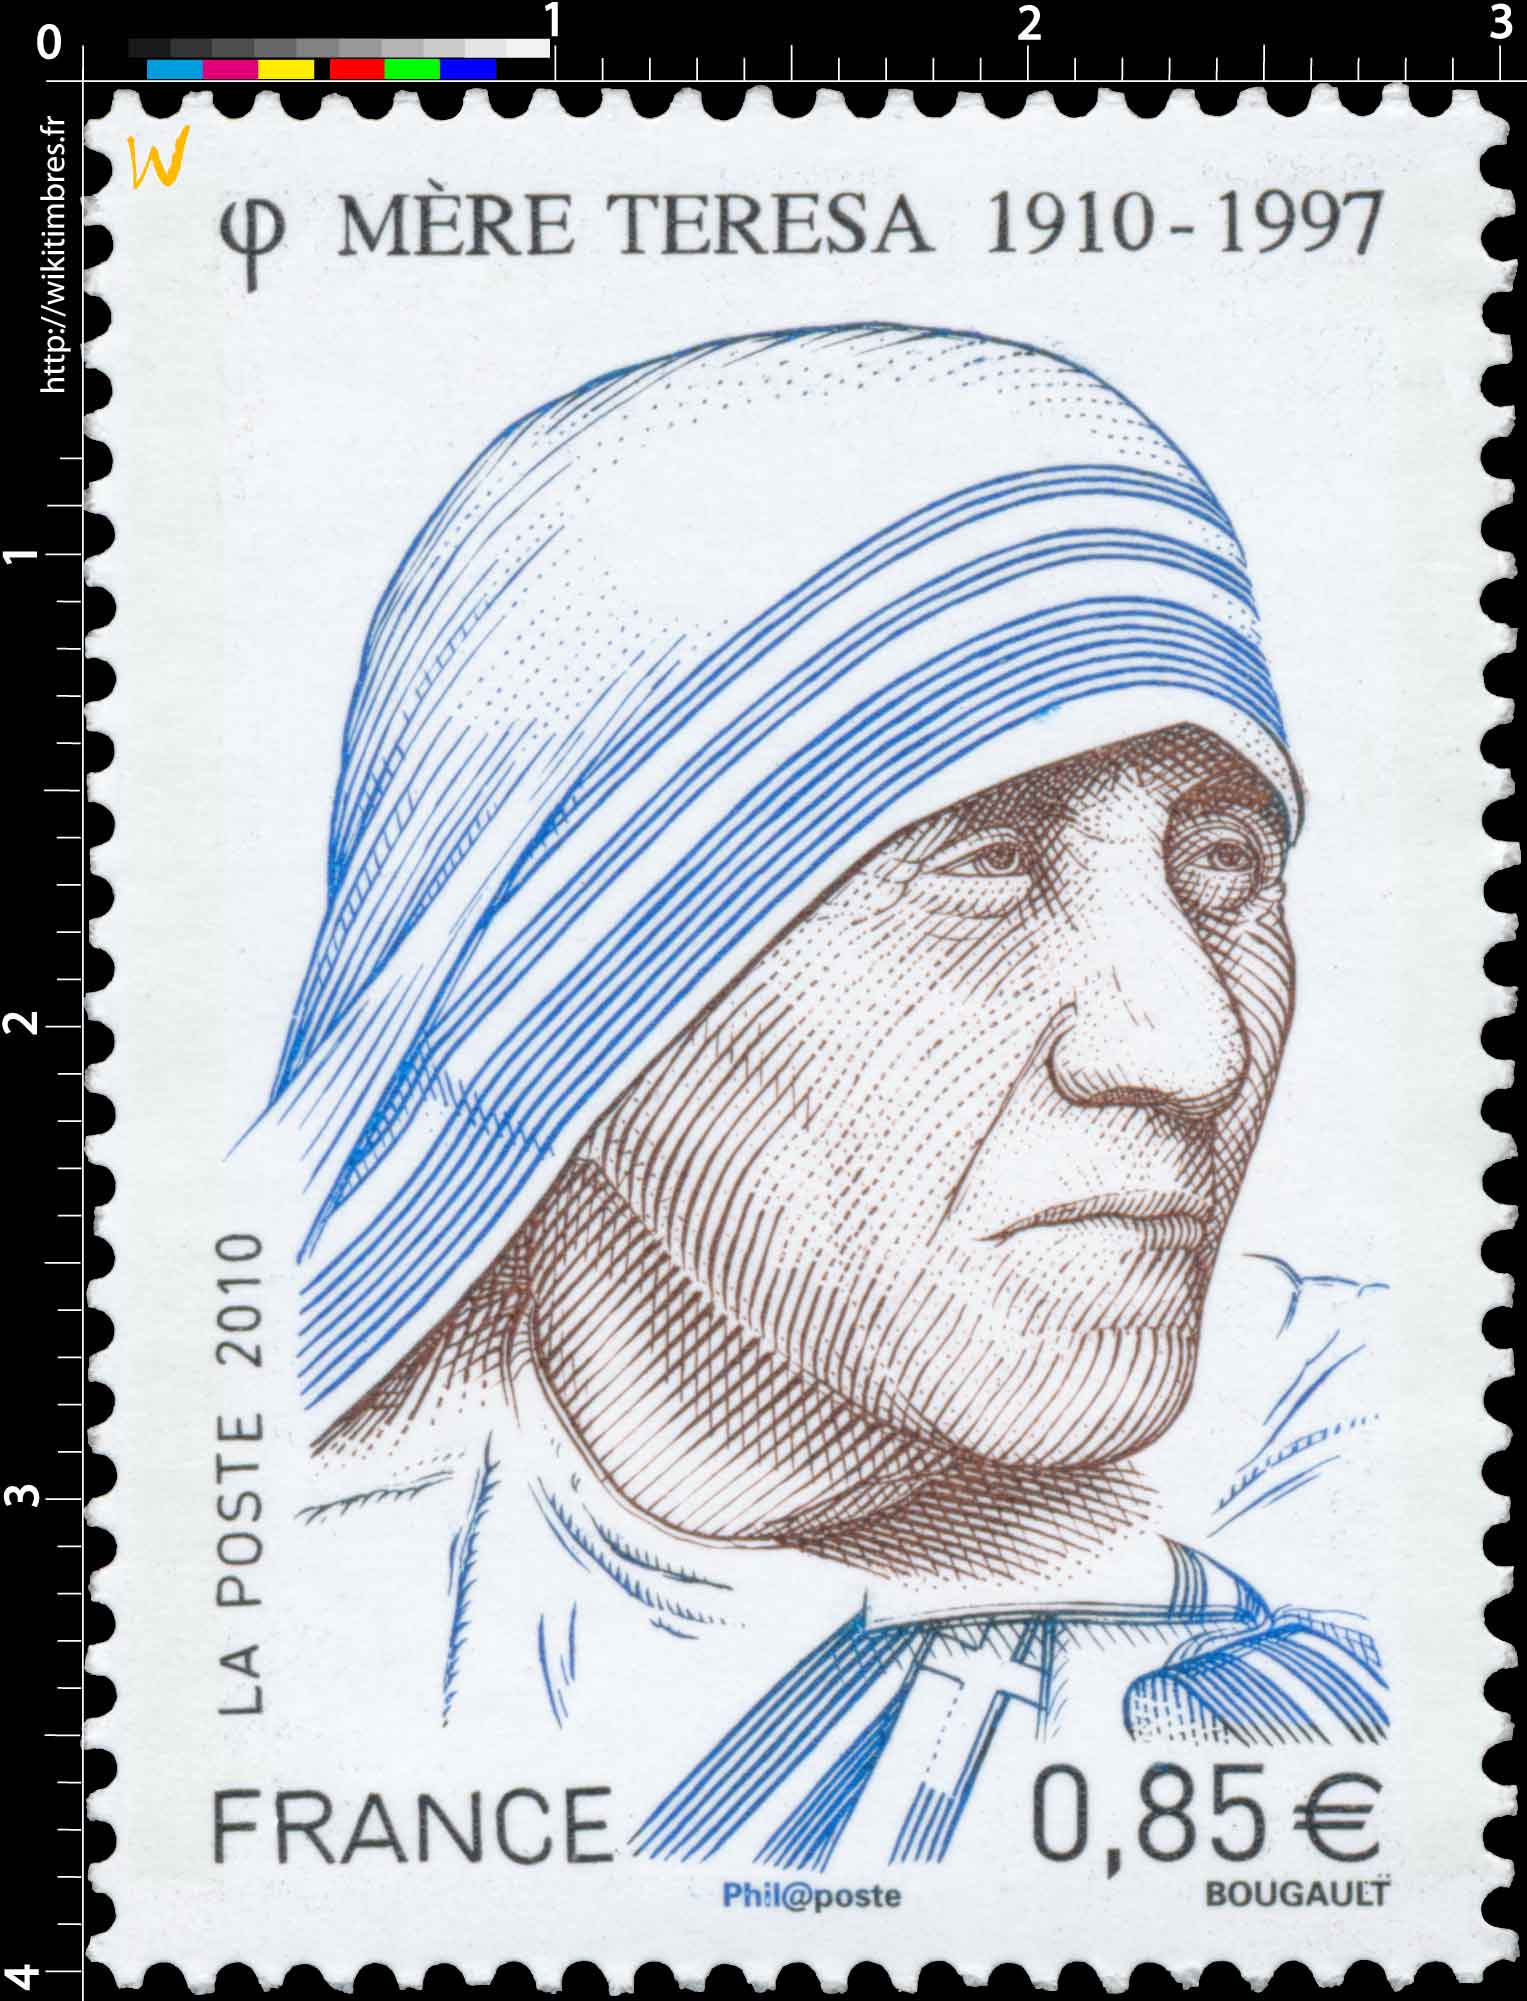 2010 Mère Teresa 1910-1977